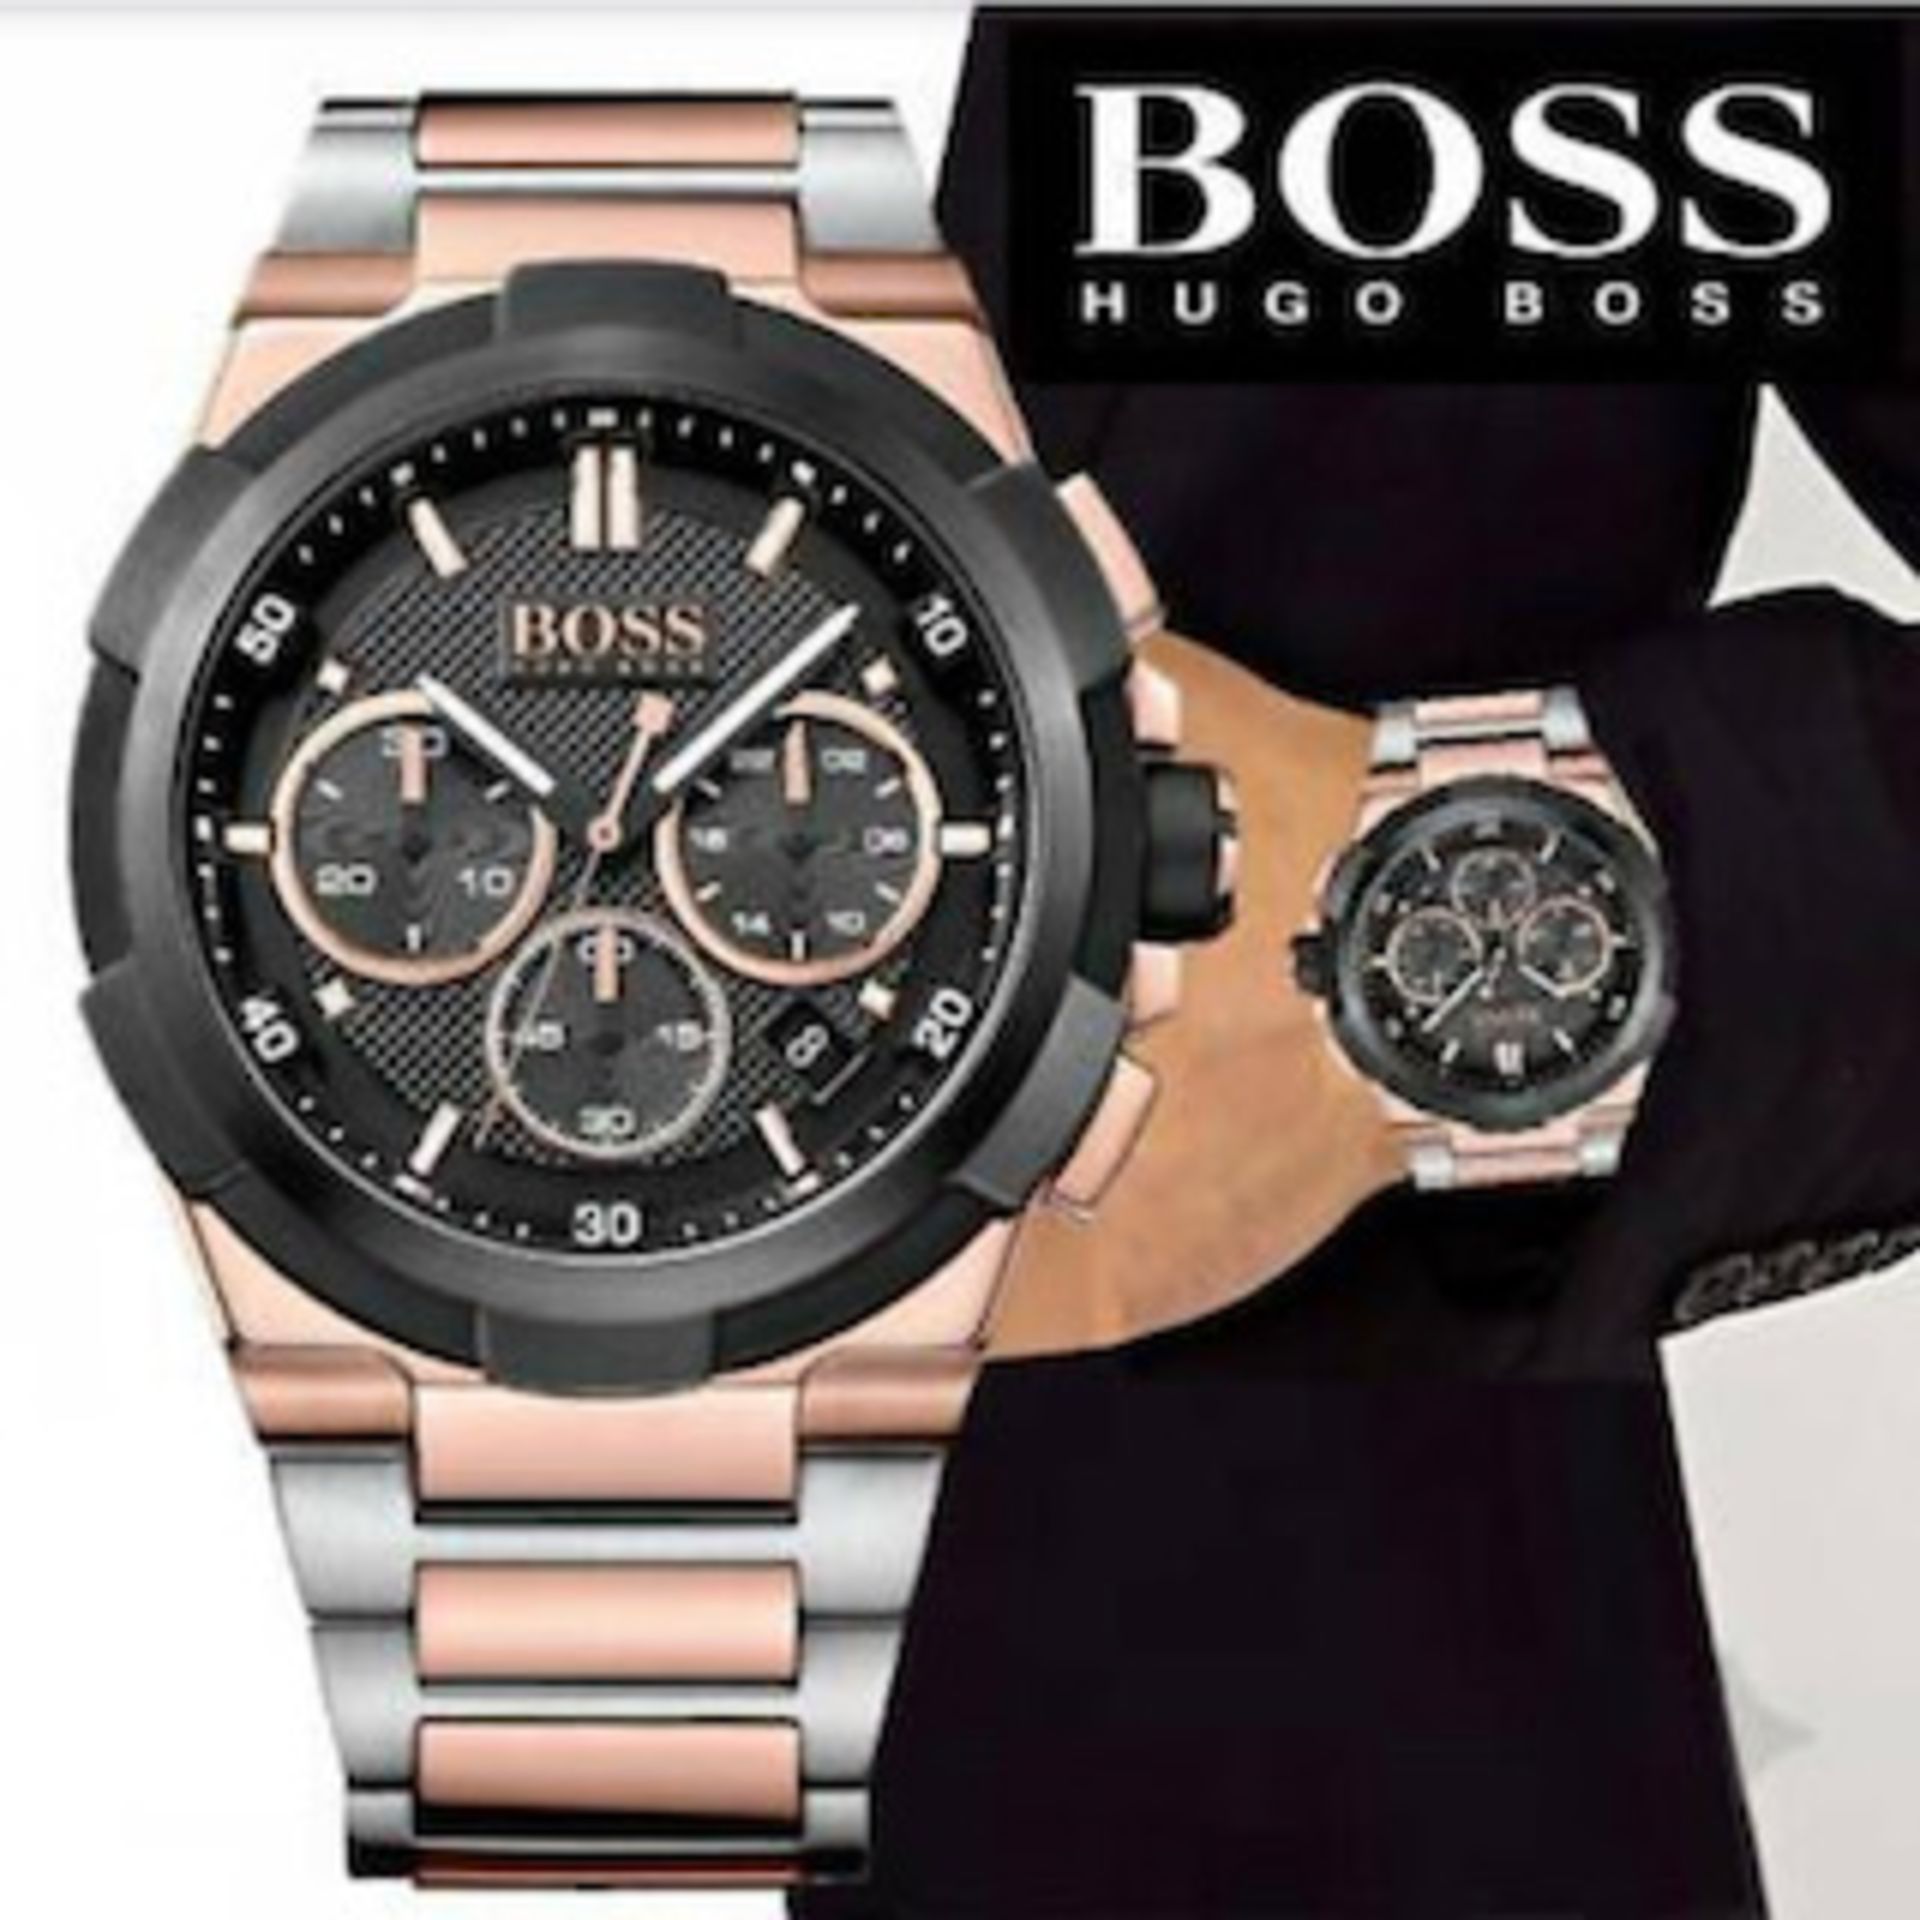 Hugo Boss 1513358 Men's Supernova Rose Gold & Silver Chronograph Watch - Image 2 of 5